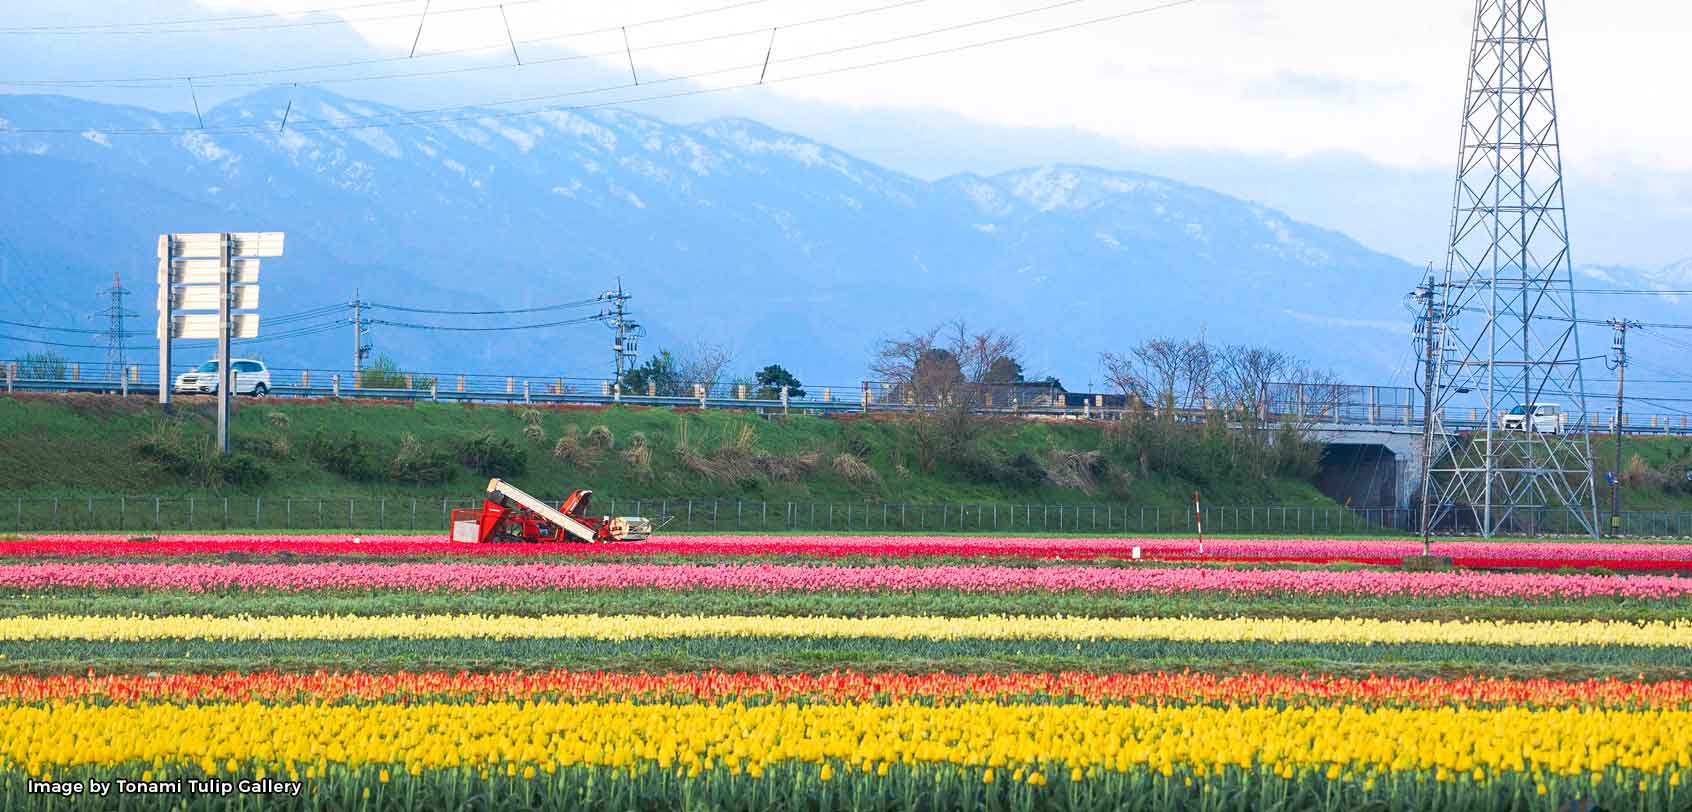 Tonami Tulip Fields